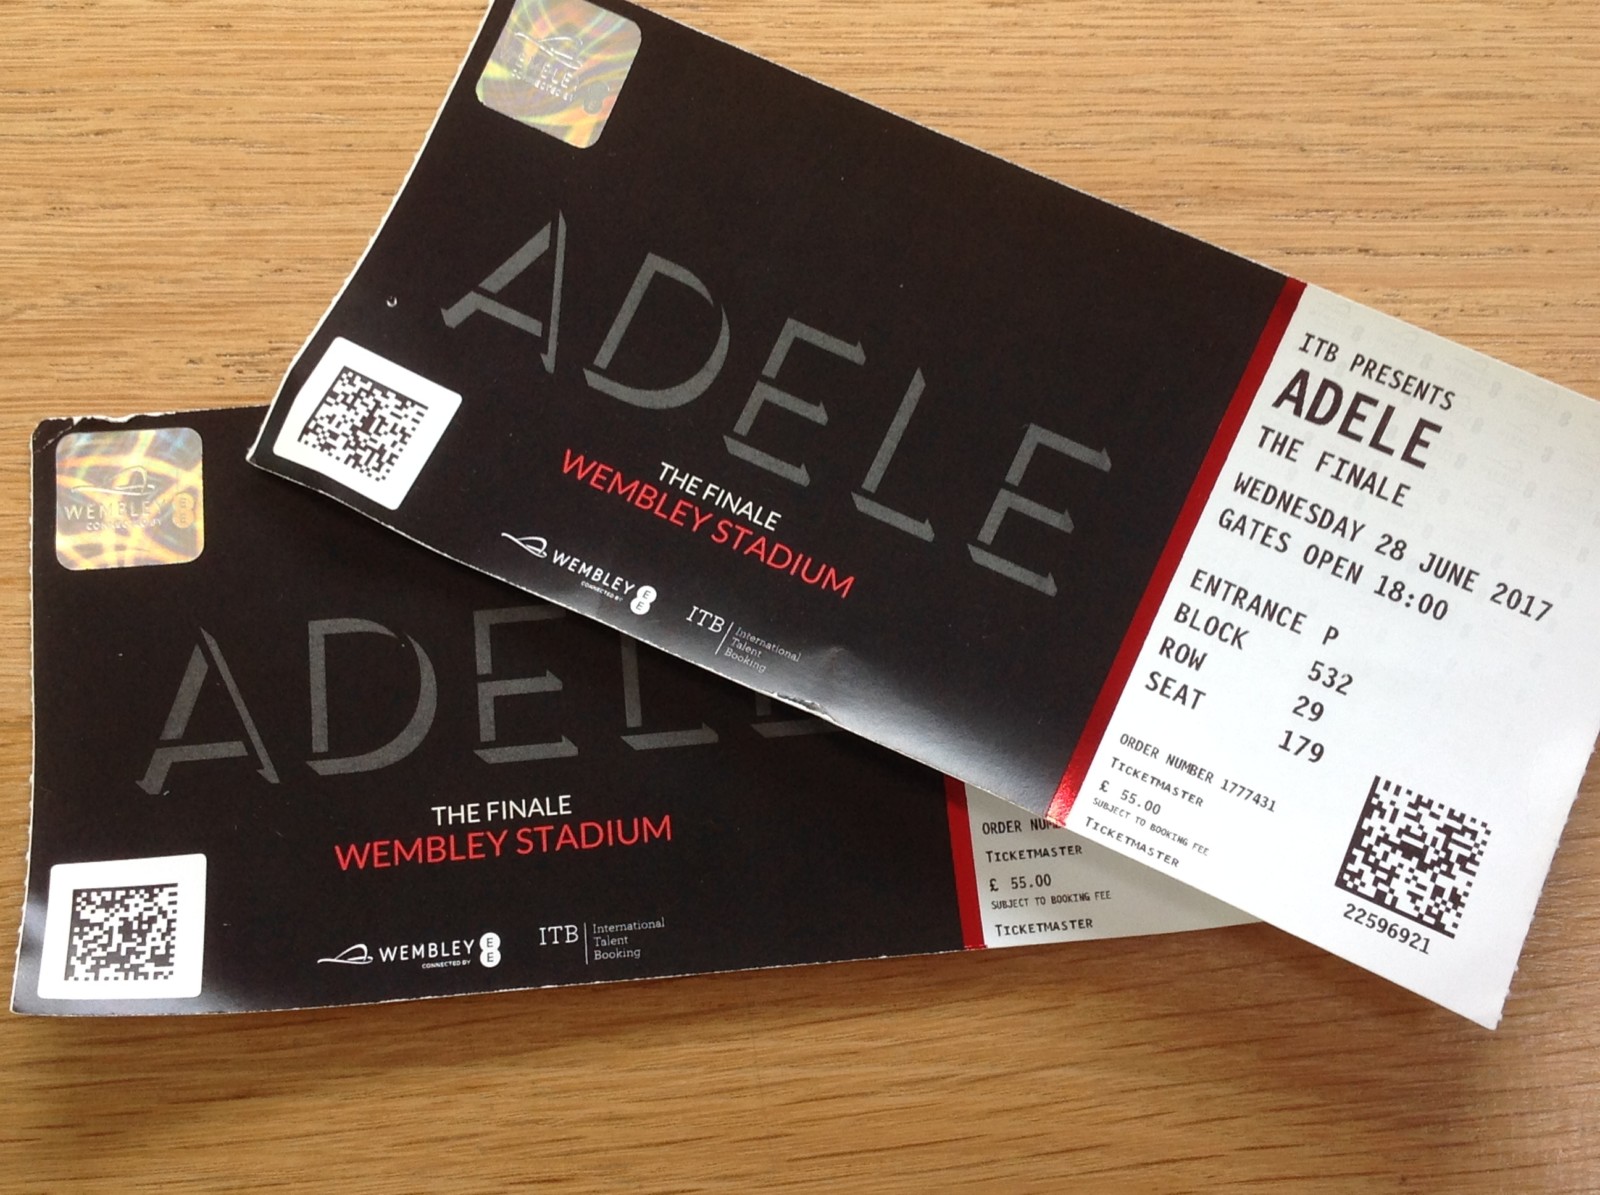 Adele tickets